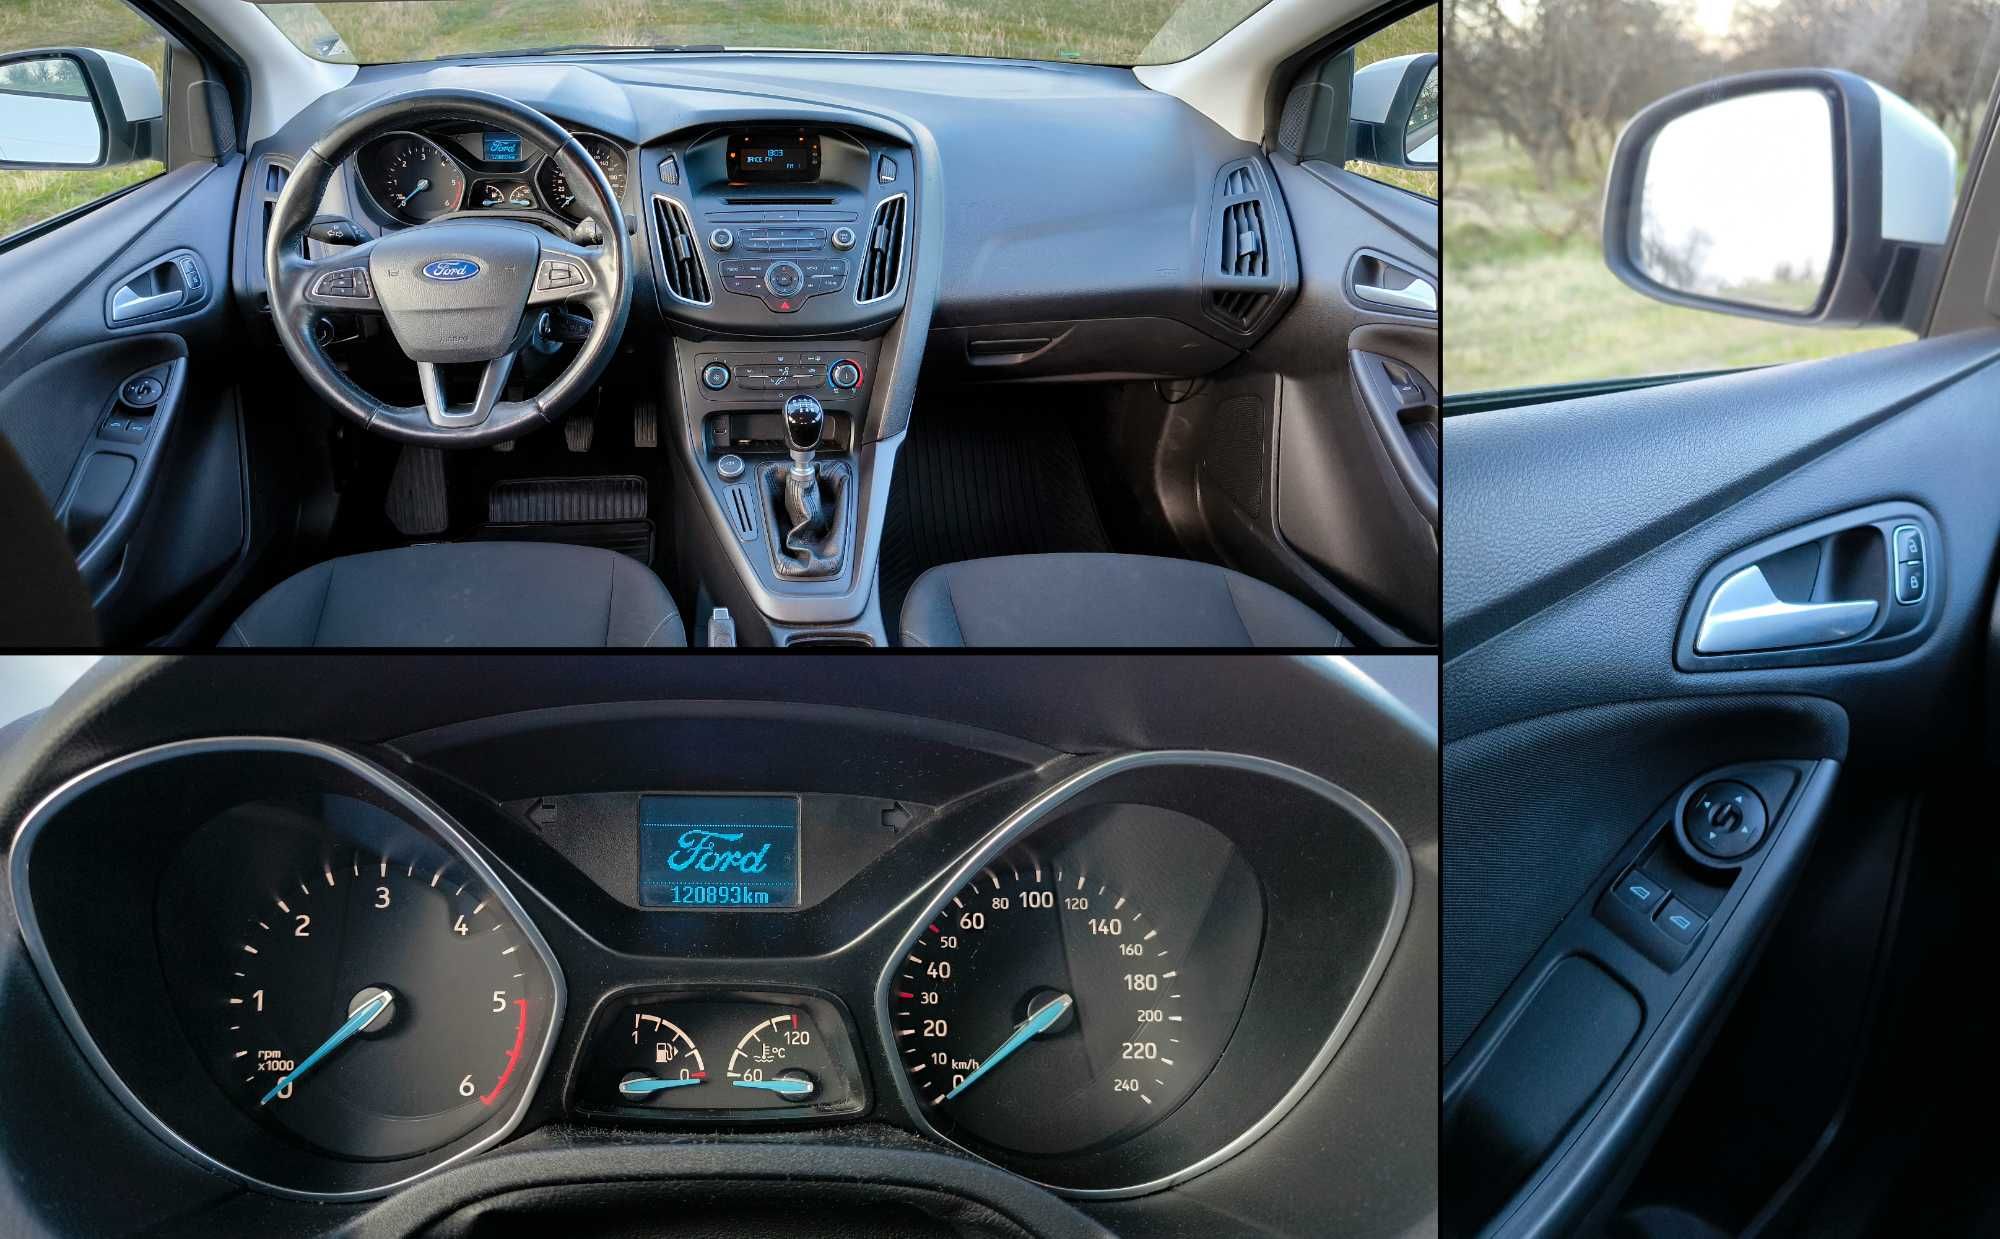 Ford Focus 2015, inmatriculat, 1,5 TDCI, 2015, 95 CP